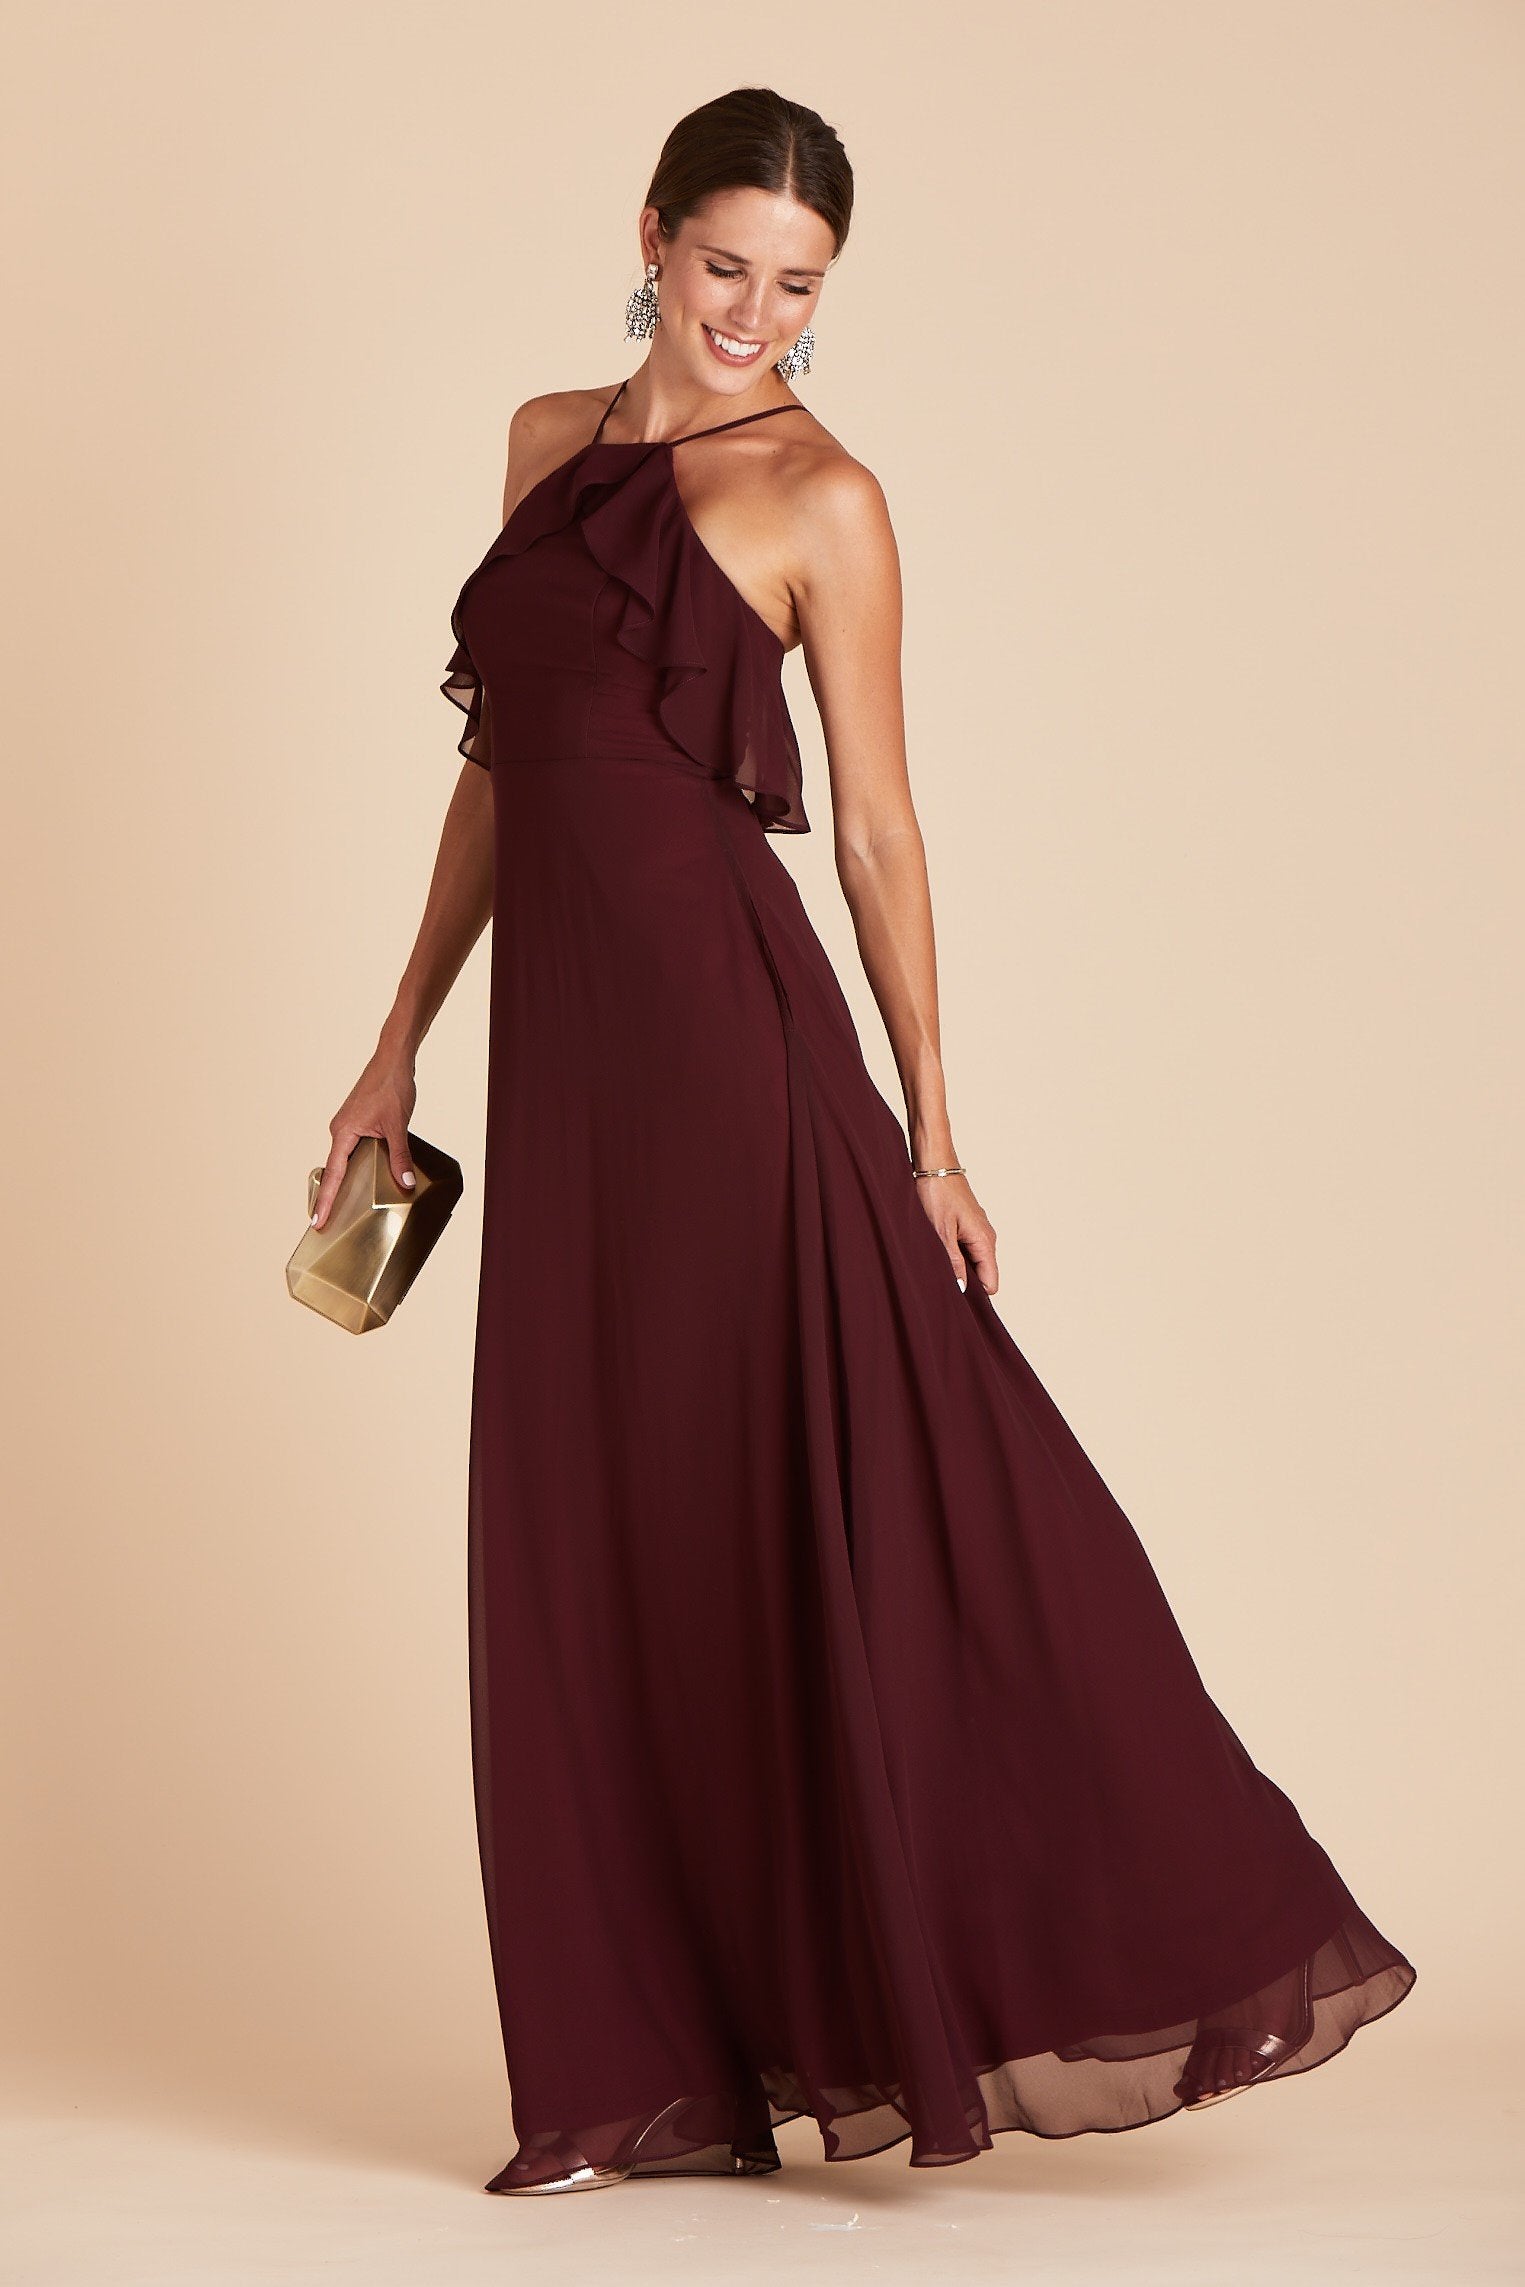 Jules bridesmaid dress in cabernet burgundy chiffon by Birdy Grey, side view